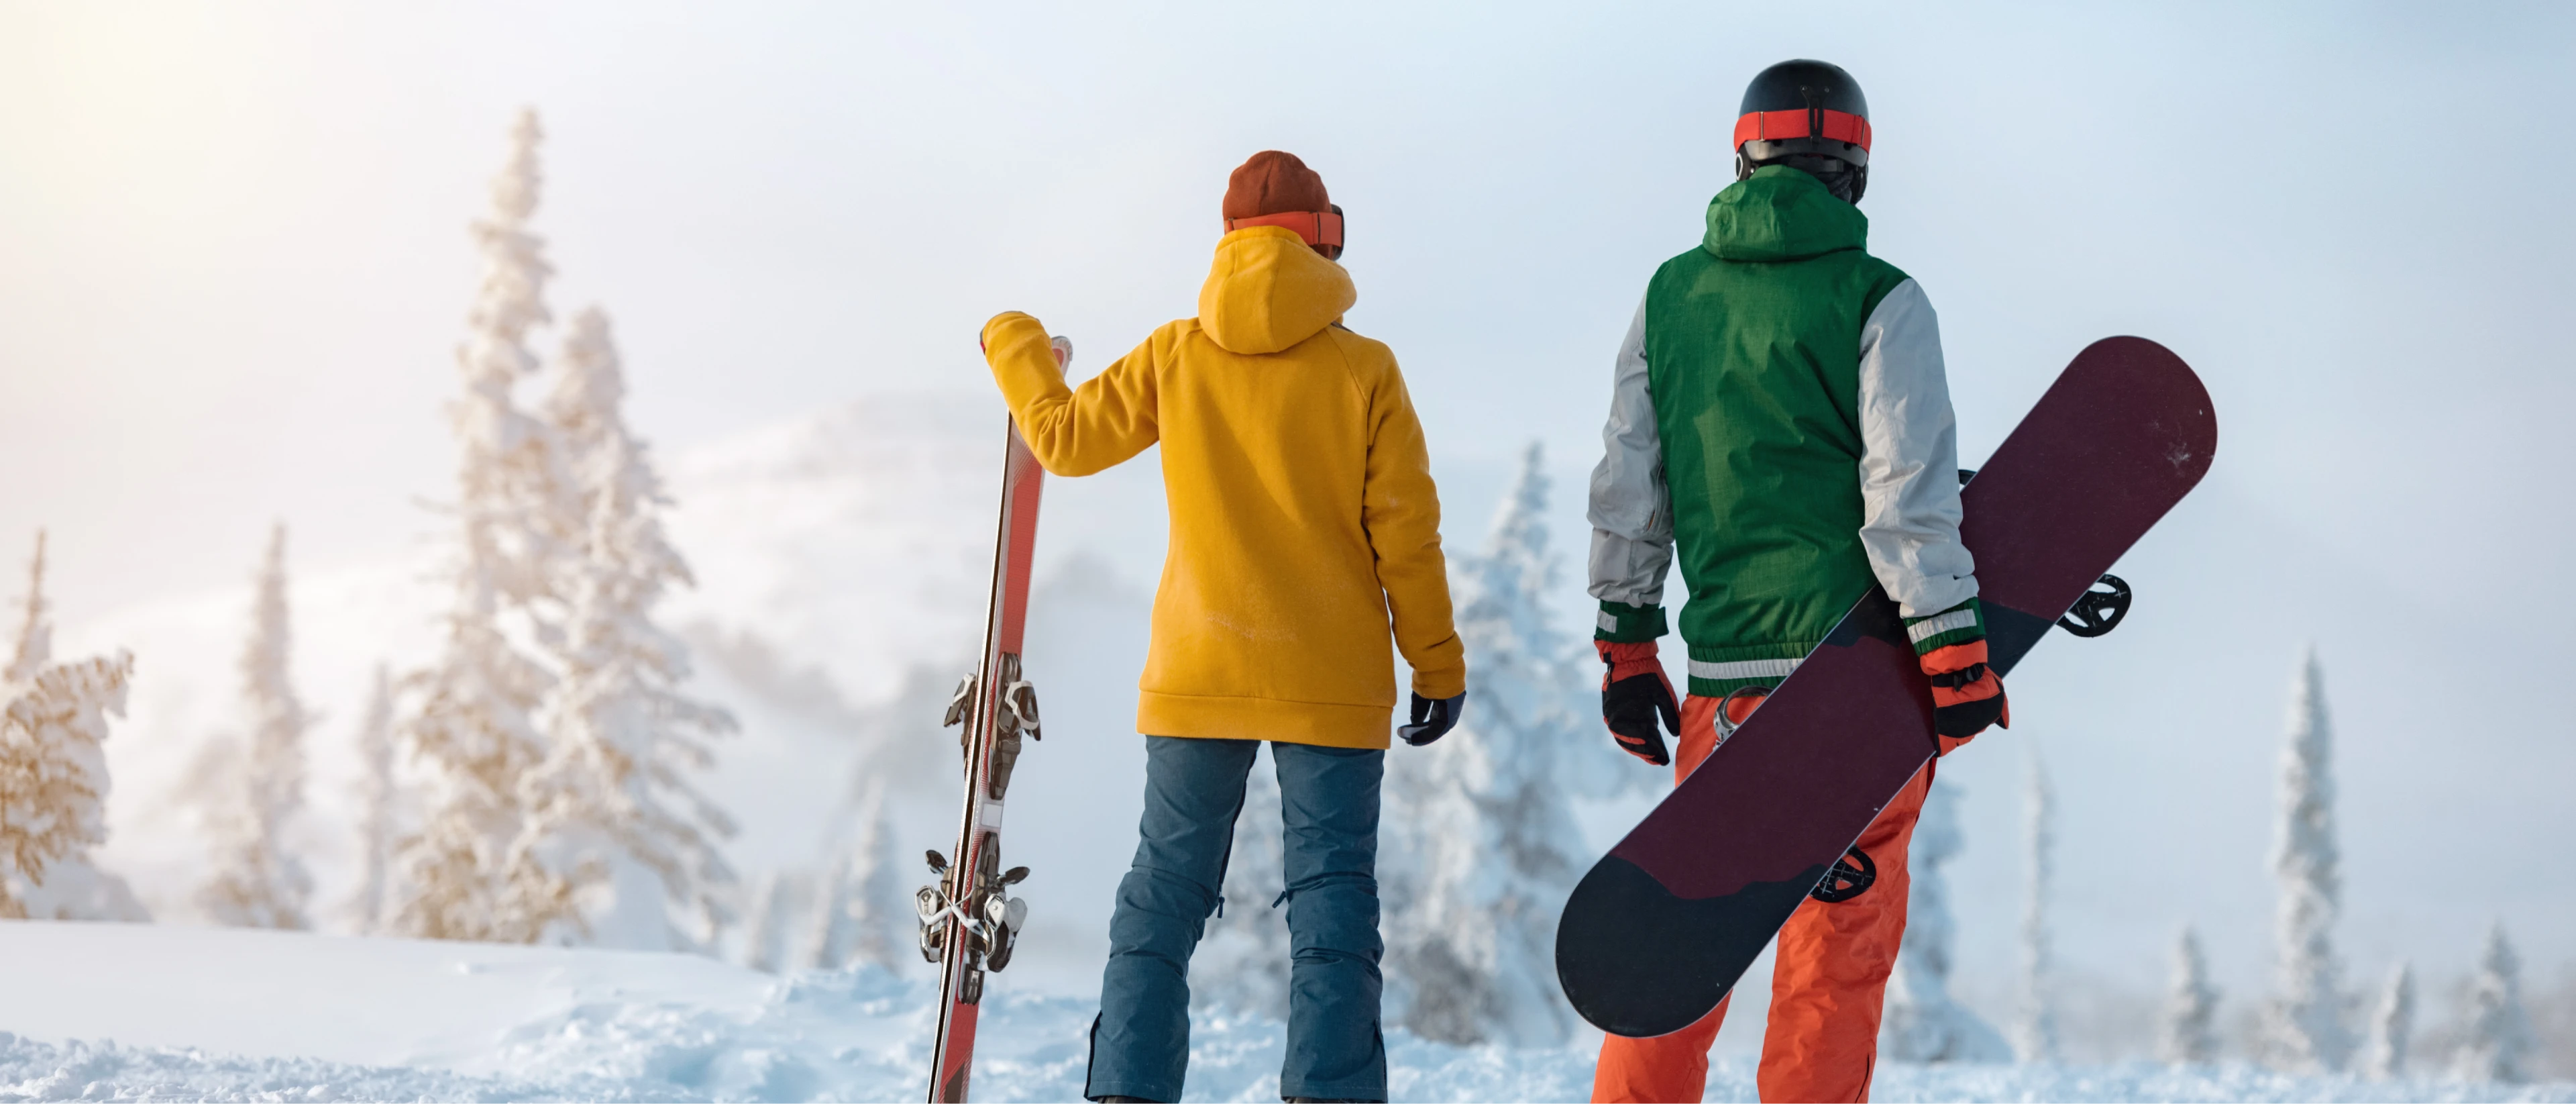 lifestyle-skier-snowboarder-standing-at-ski-resort-1306636234